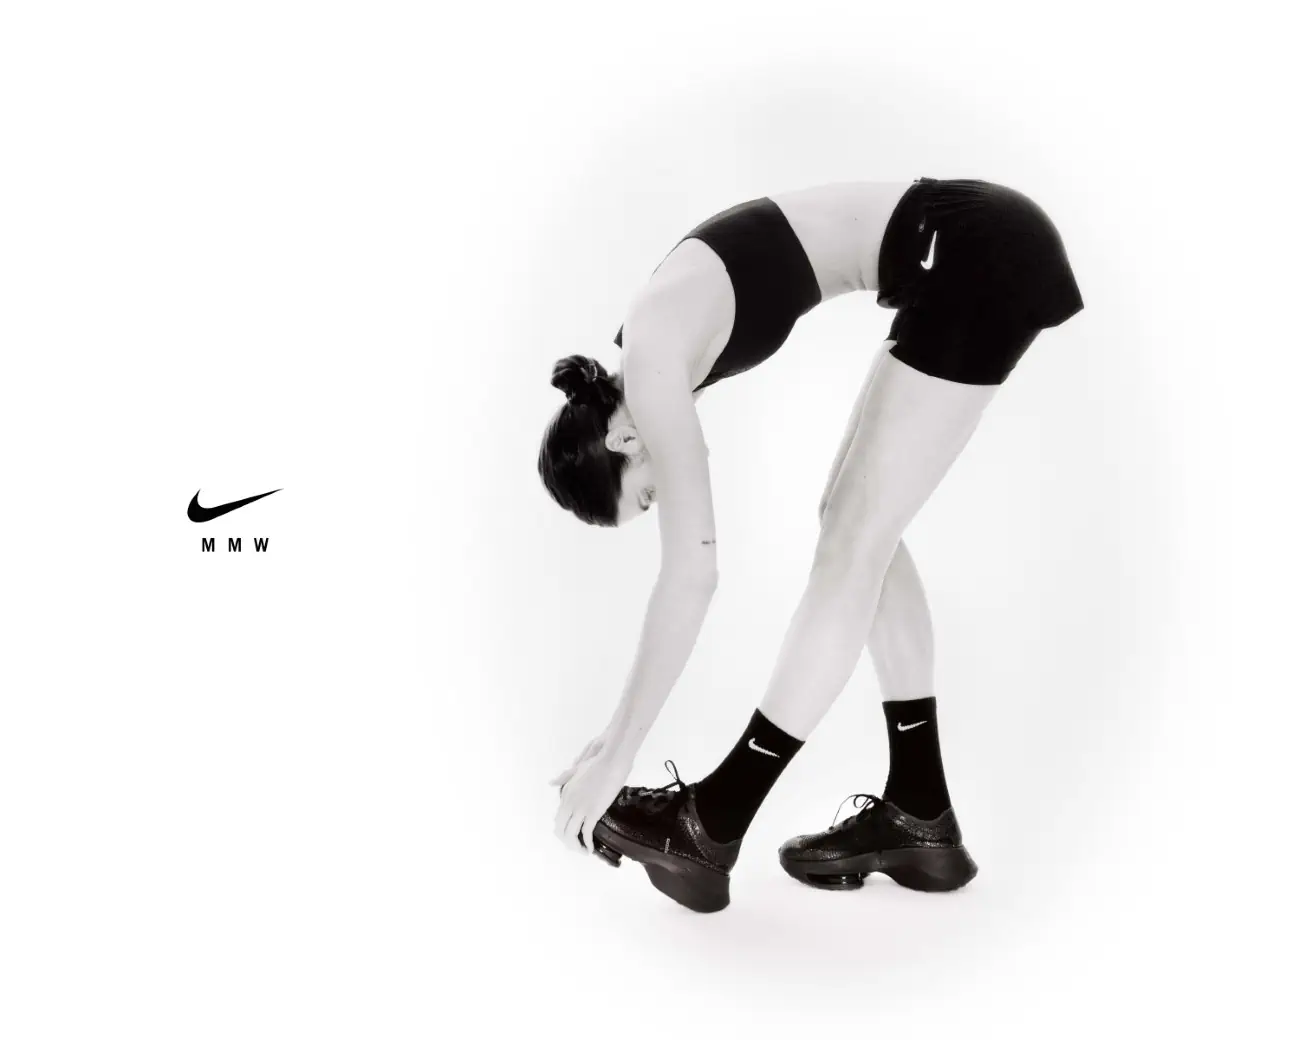 Matthew M. Williams and Nike collaborate on new MMW x Nike Yoga collection